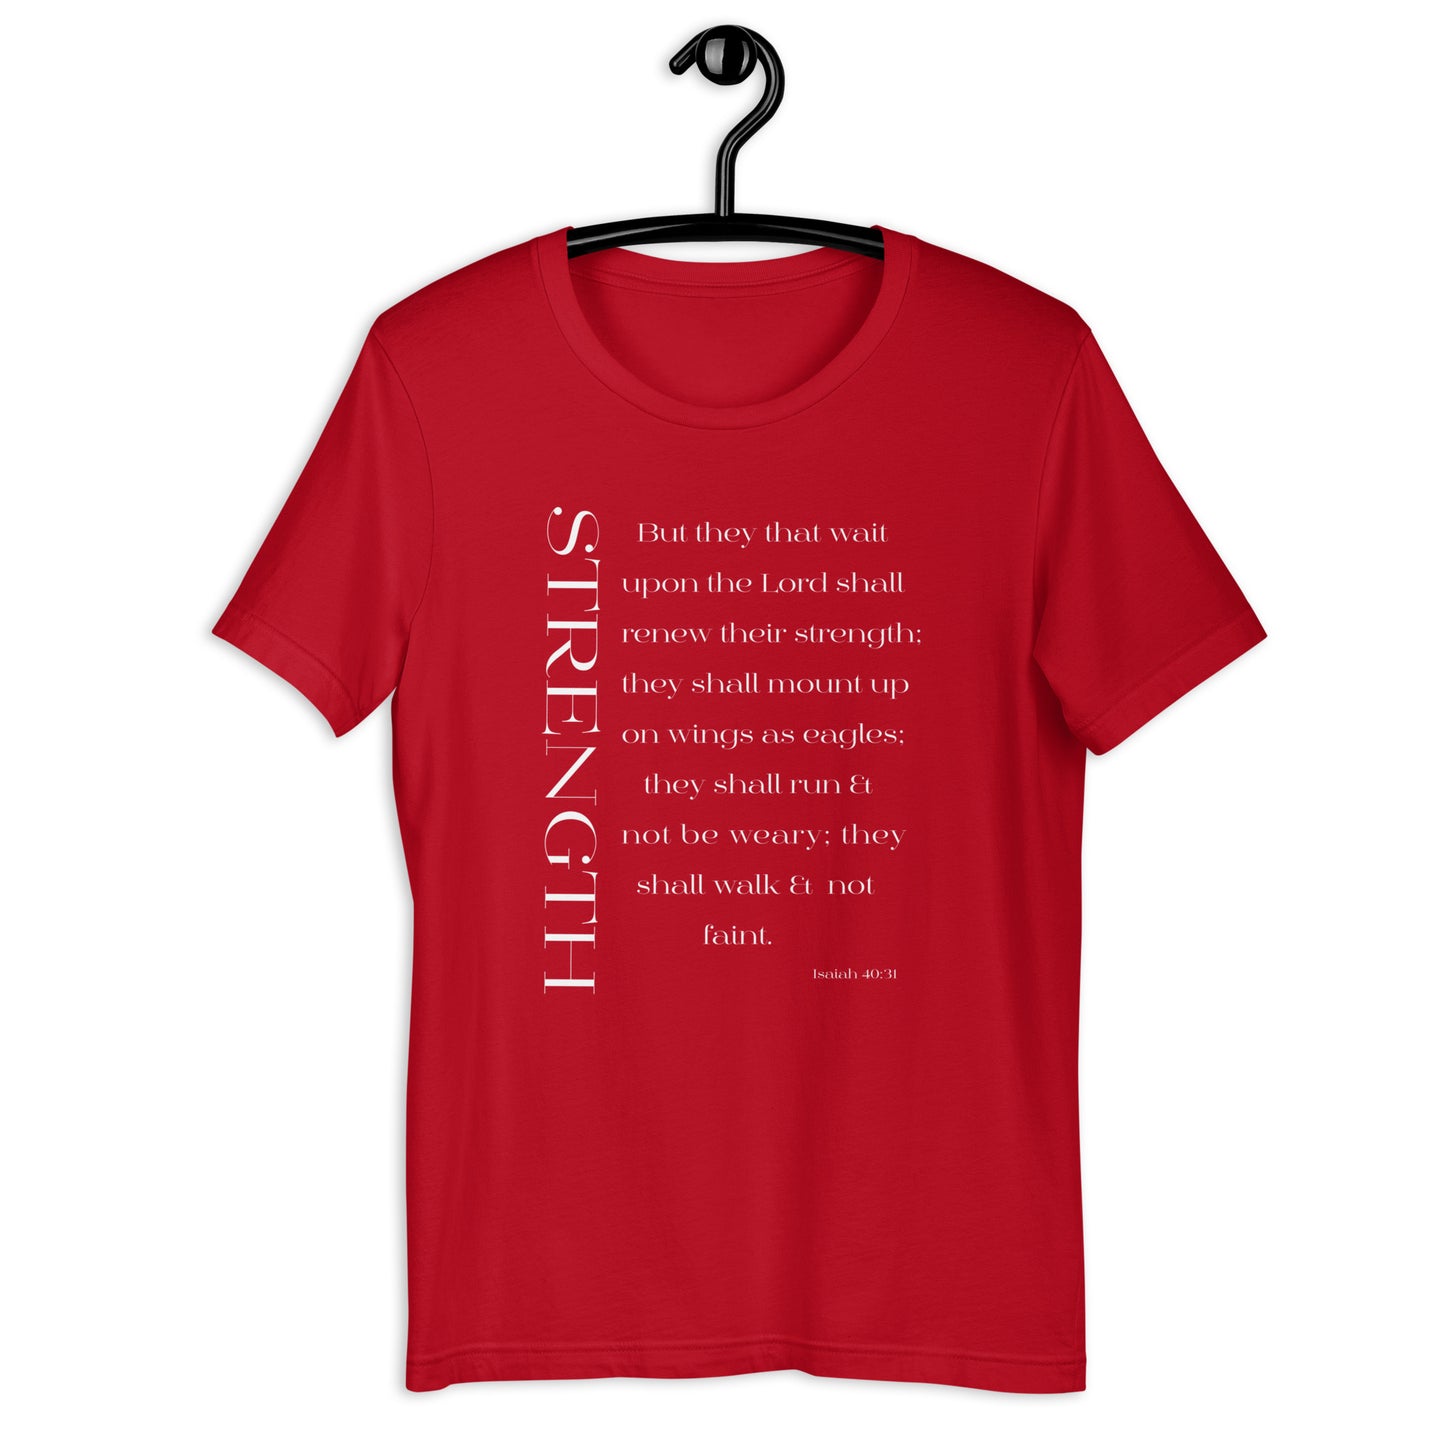 Isaiah 40:31 Strength Short-Sleeve Unisex T-Shirt red